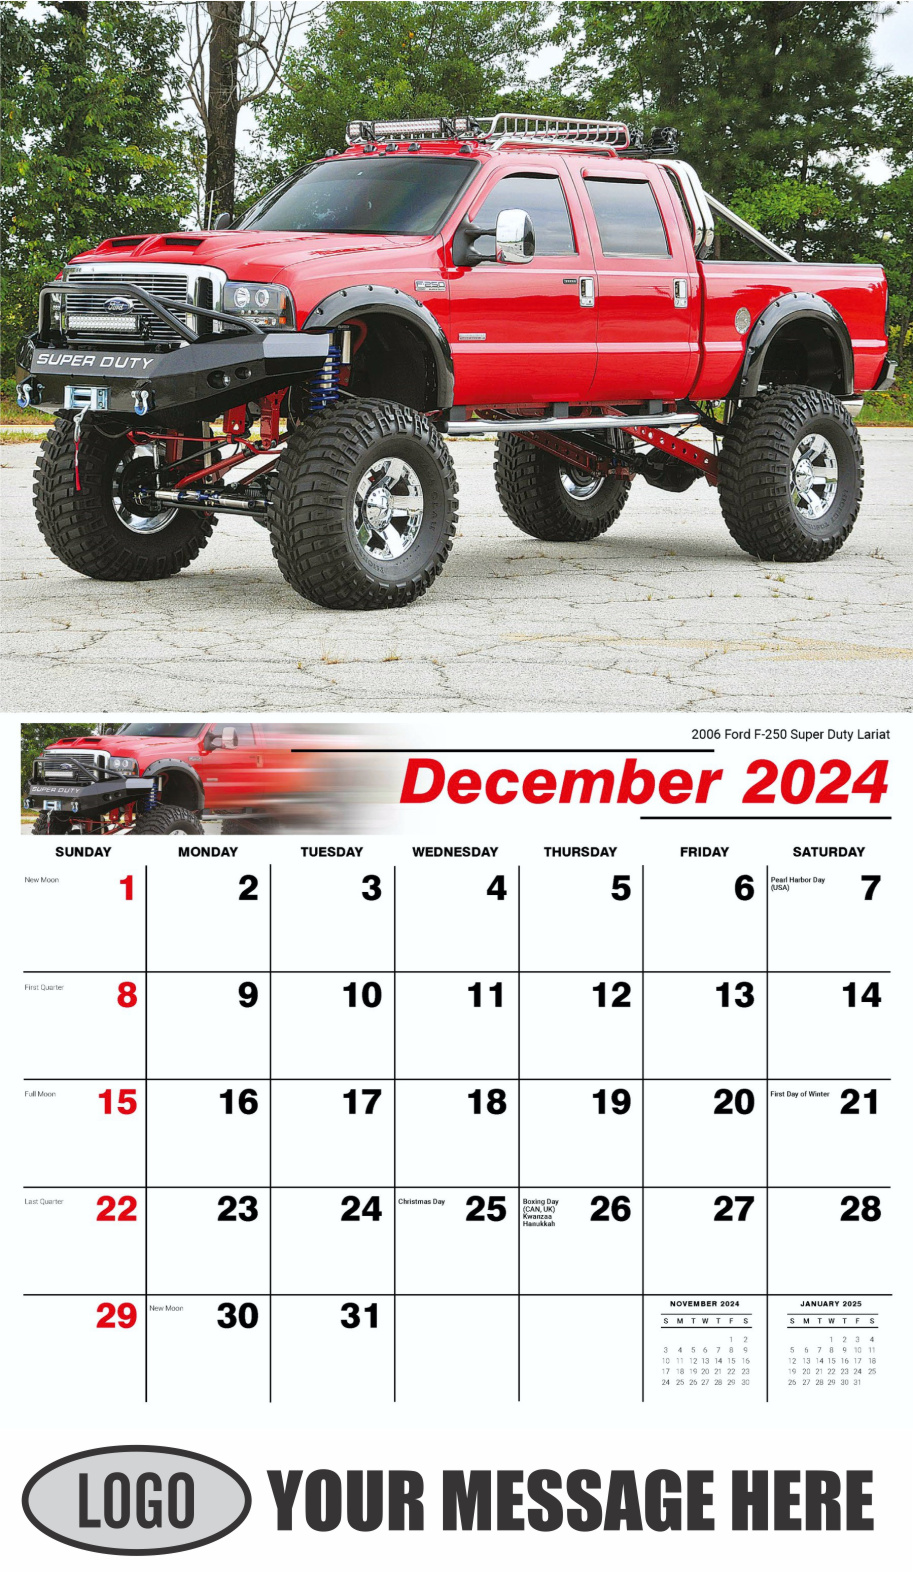 Pumped-Up Pickups 2024 Automotive Business Promo Calendar - December